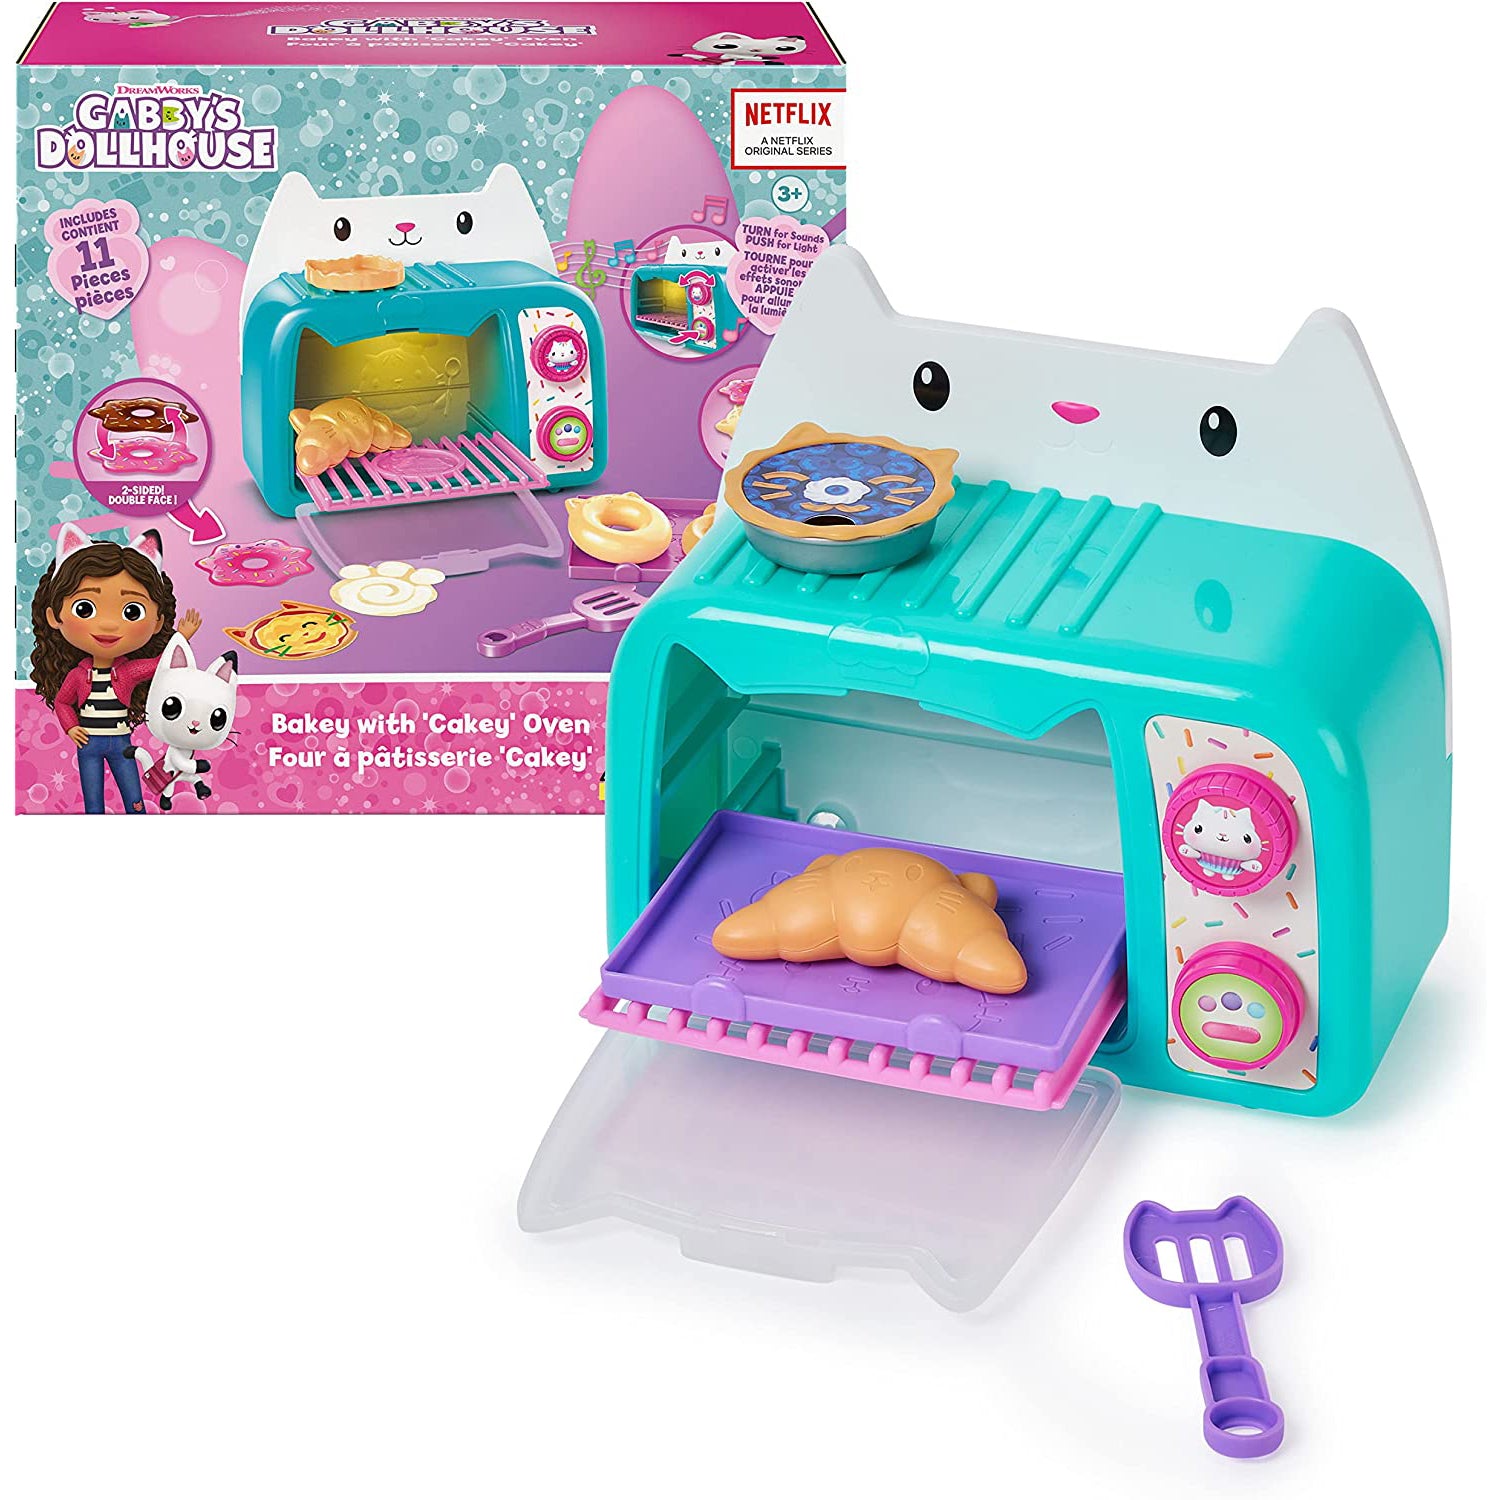 Gabby's Dollhouse Mini Playset, 1 ct - Smith's Food and Drug